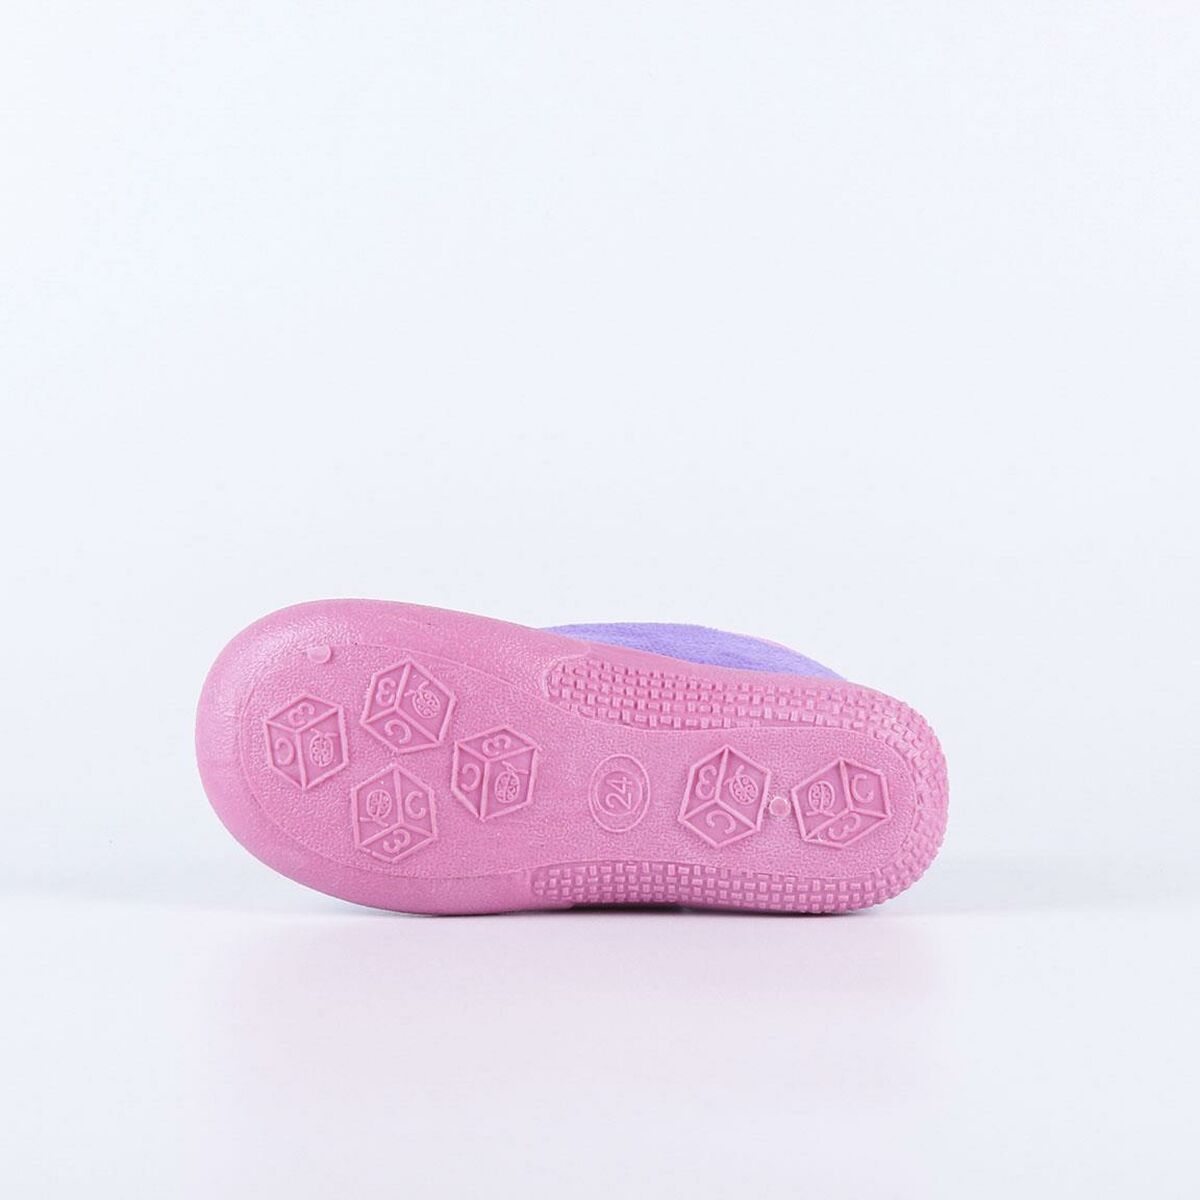 3D House Slippers Peppa Pig Pink Purple